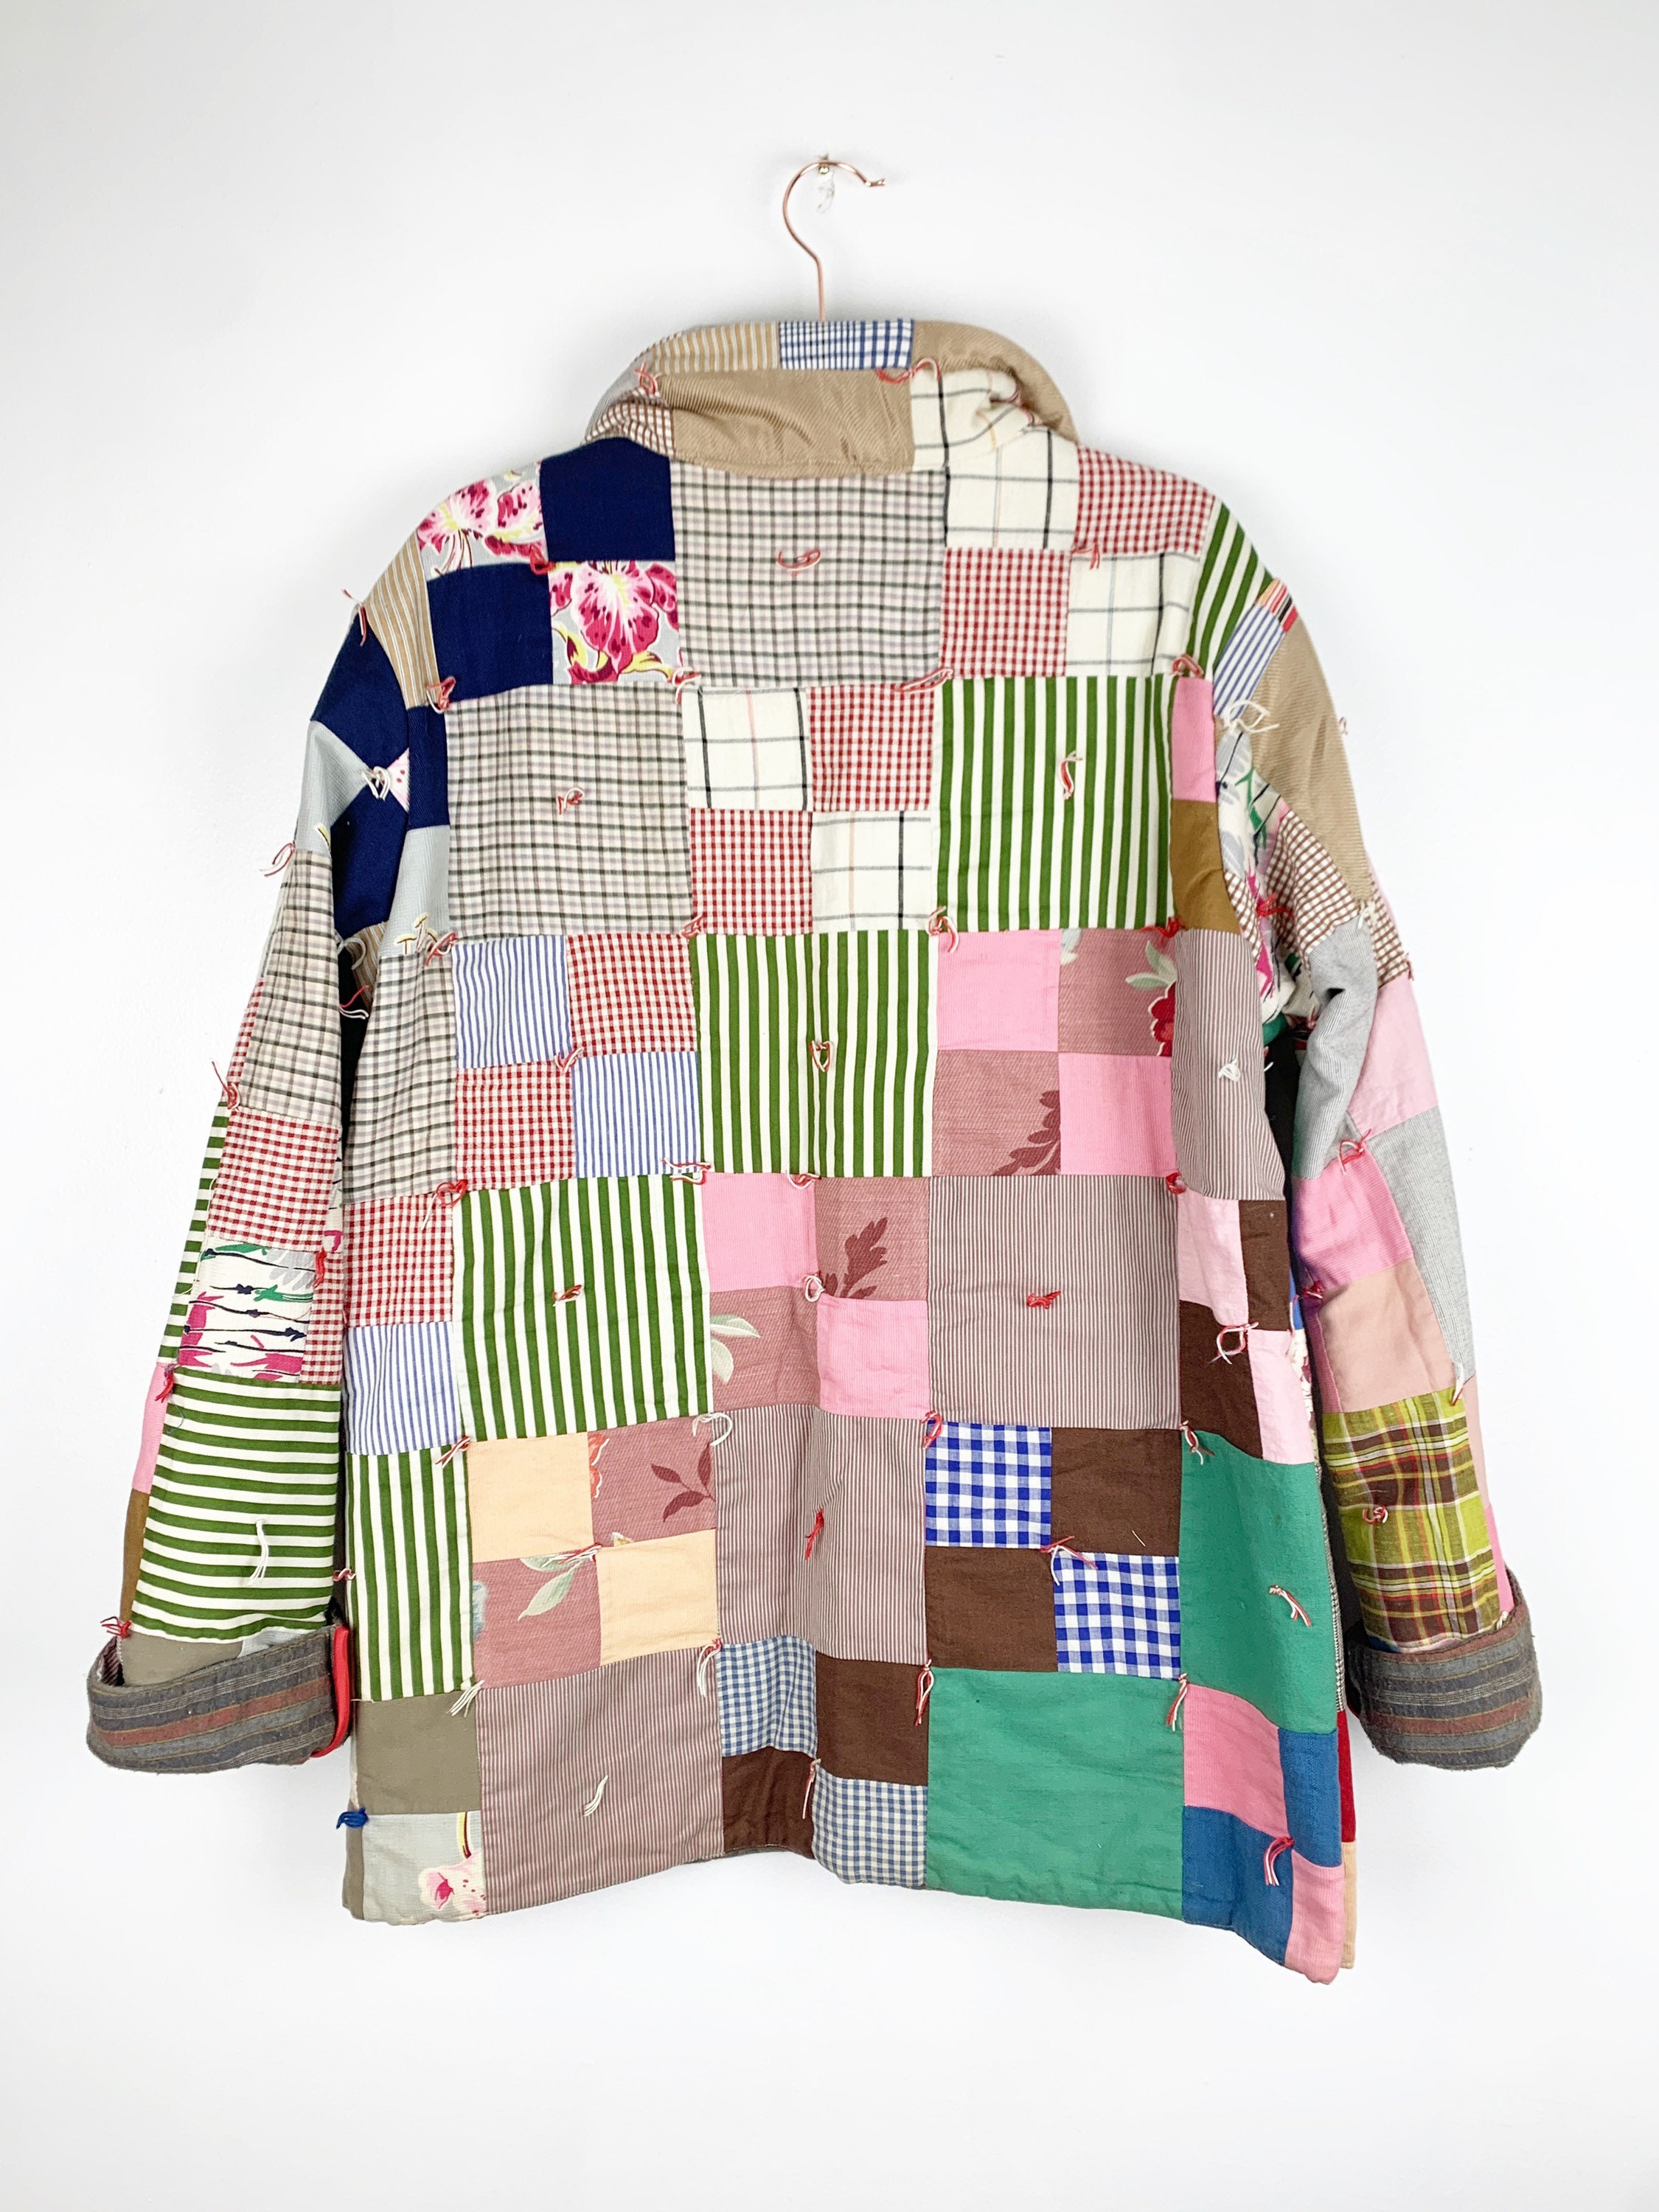 Quilt Chore Coat / Vintage Patchwork Quilted Jacket / Jacket | Etsy